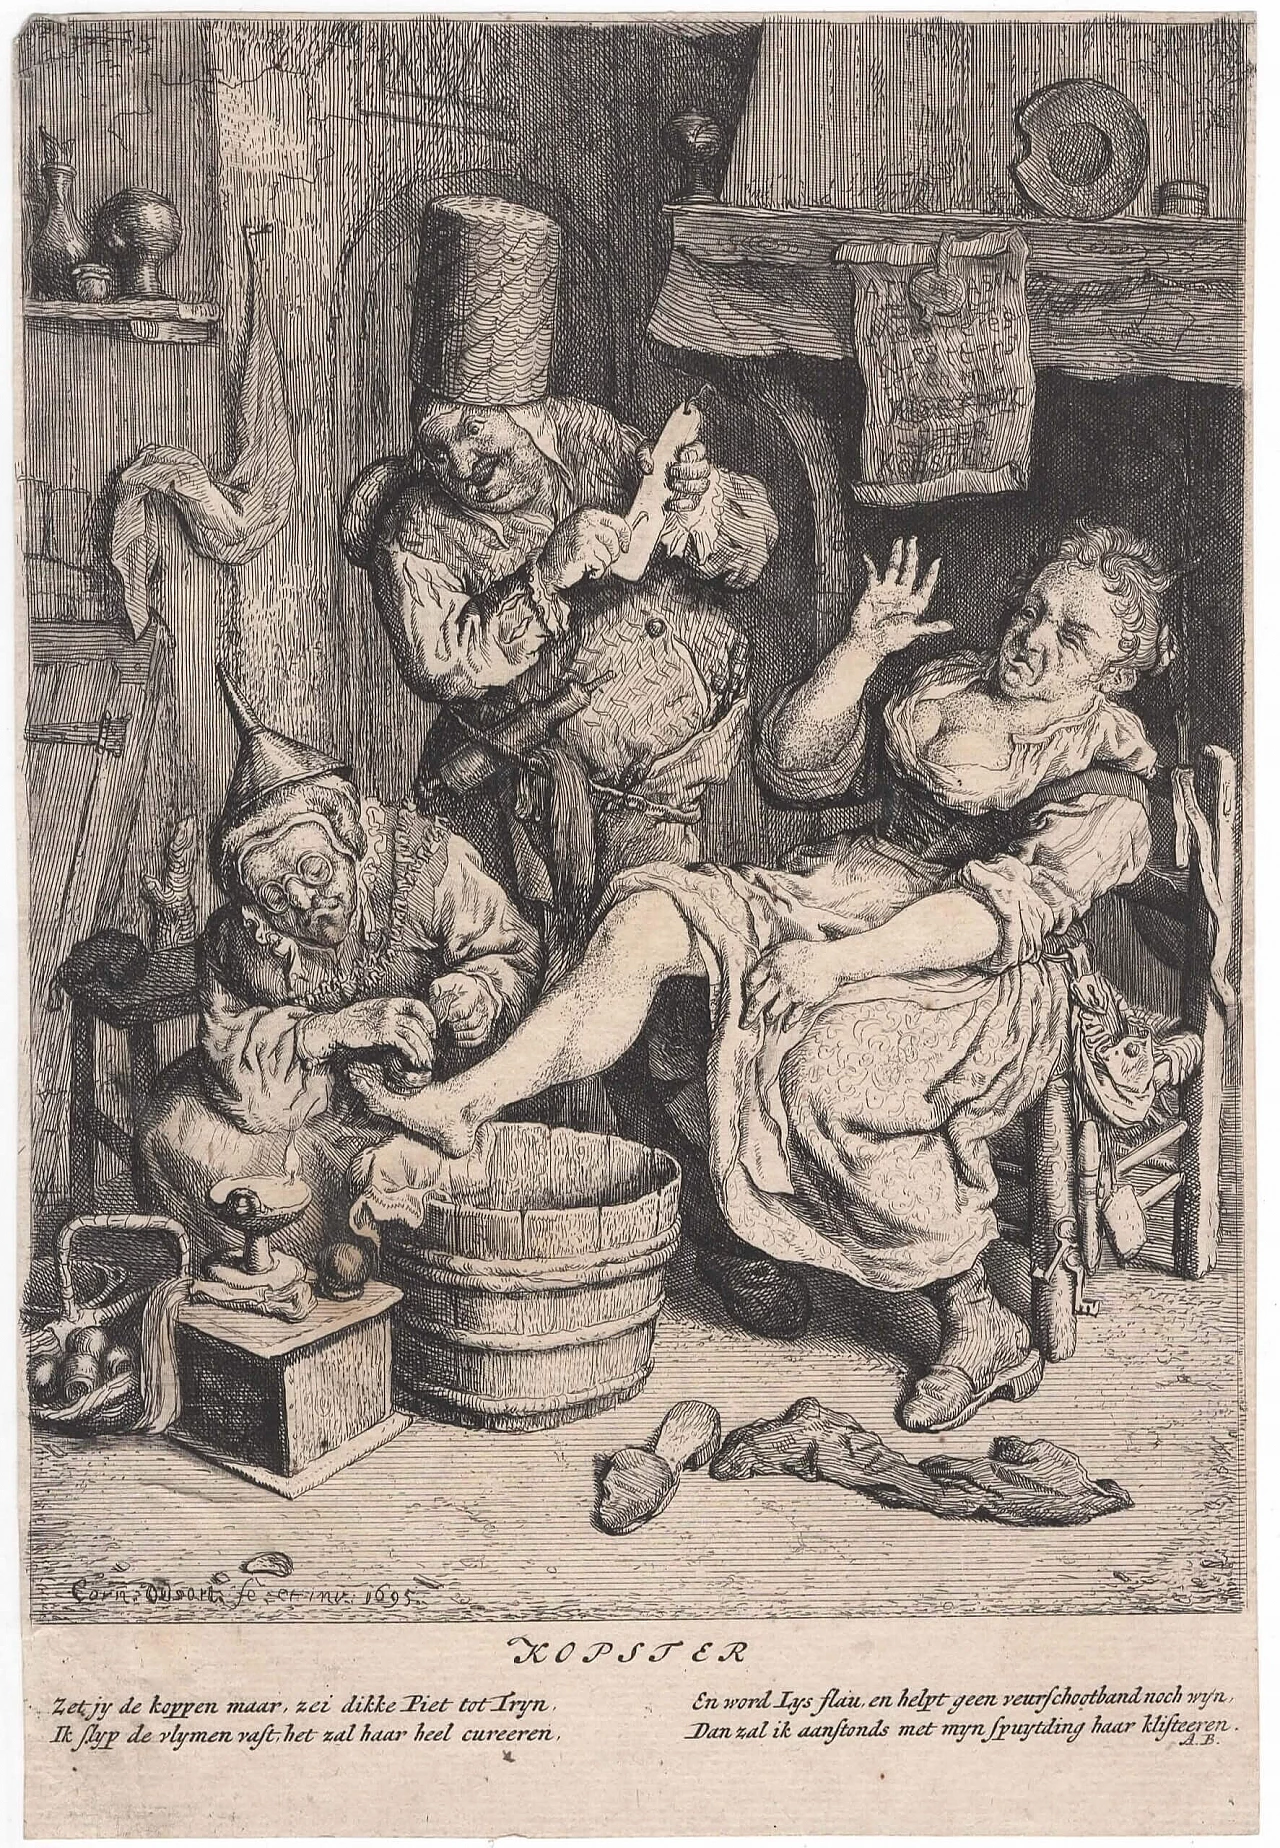 Impression on paper by Cornelis Dusart, '700 1